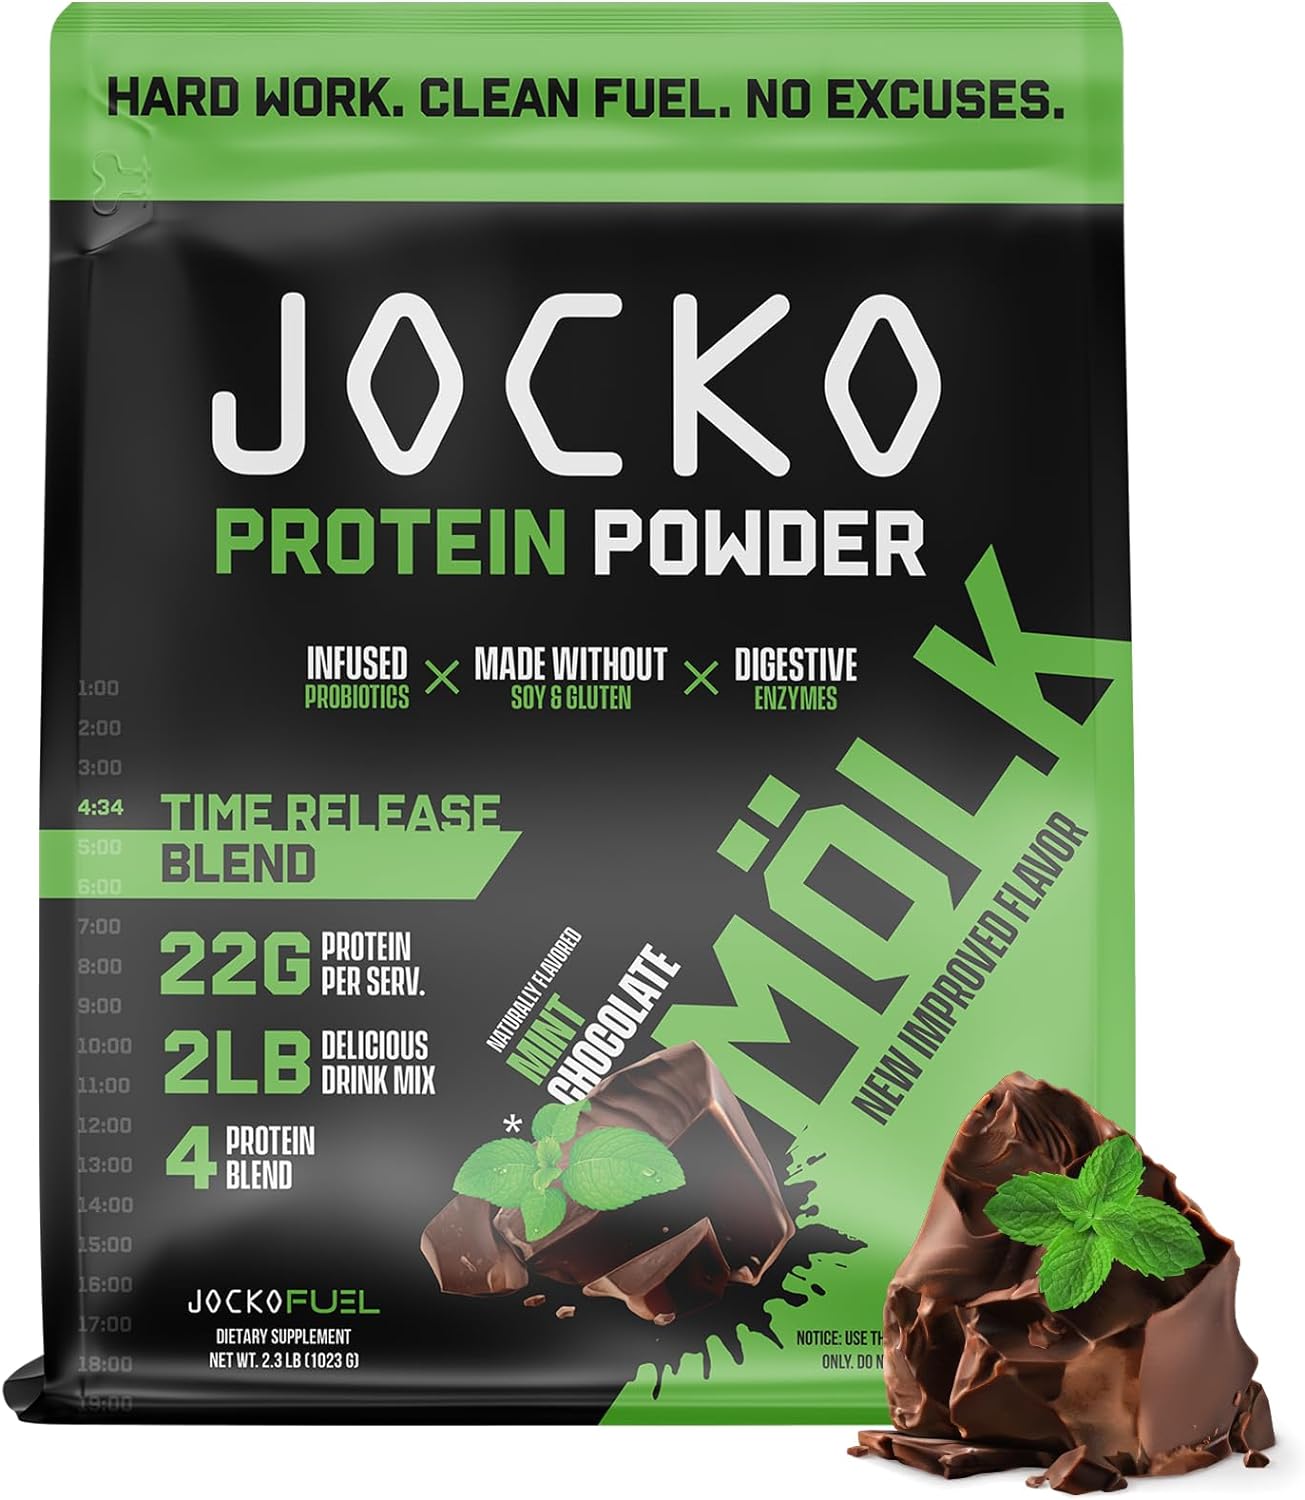 Jocko Mlk Whey Protein Powder (Mint Chocolate) - Keto, Probiotics, Gr